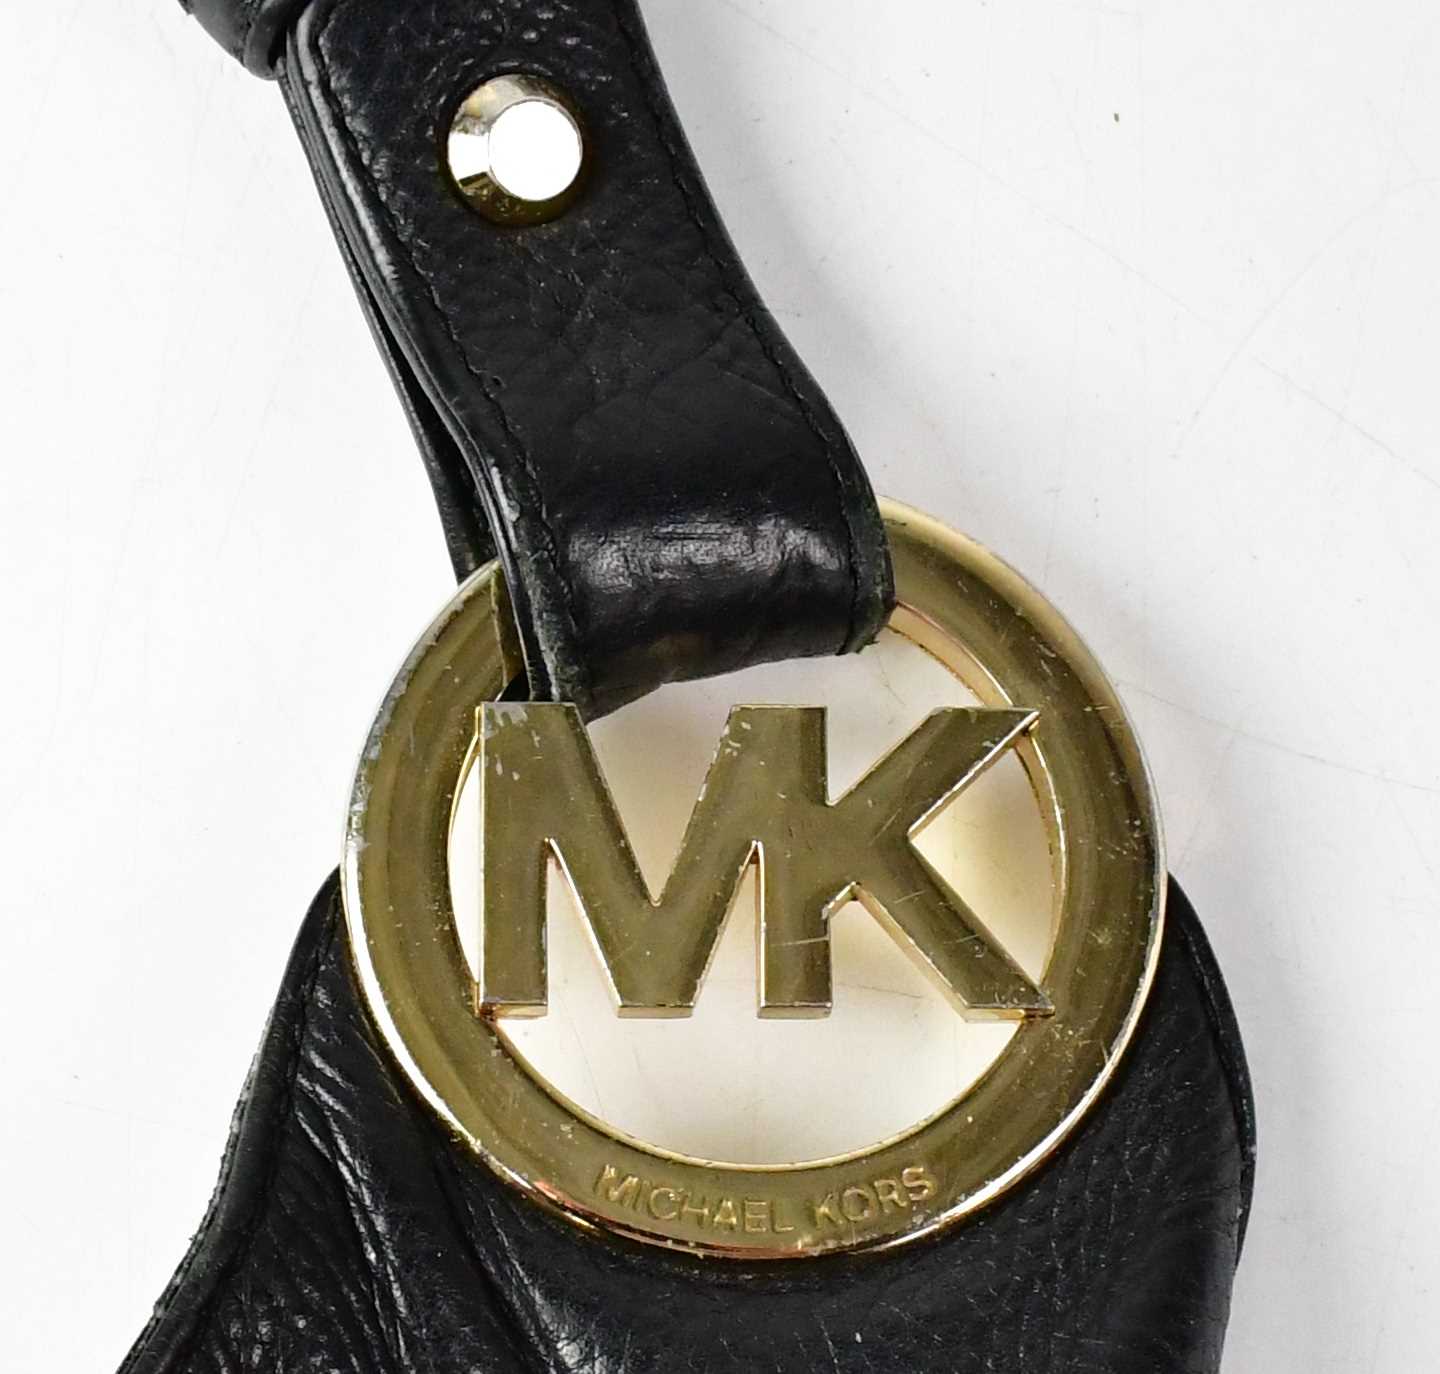 MICHAEL KORS; a black pebbled leather hobo shoulder bag, with a similar Michael Kors purse/wallet ( - Image 2 of 4